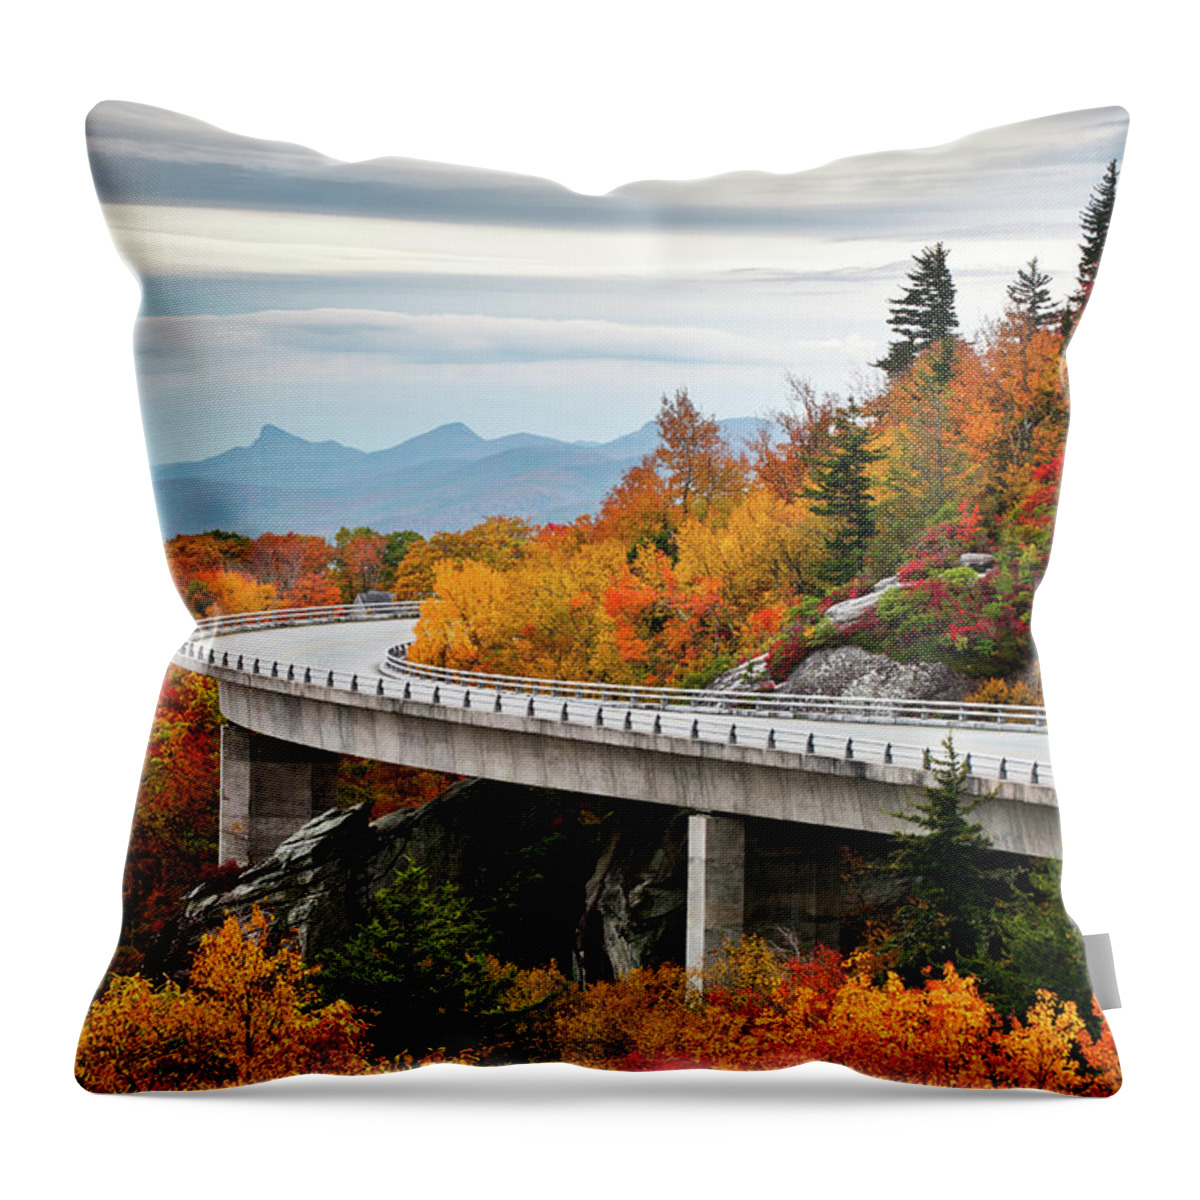 Linn Cove Viaduct Throw Pillow featuring the photograph Blue Ridge Parkway Fall Foliage Linn Cove Viaduct by Dave Allen